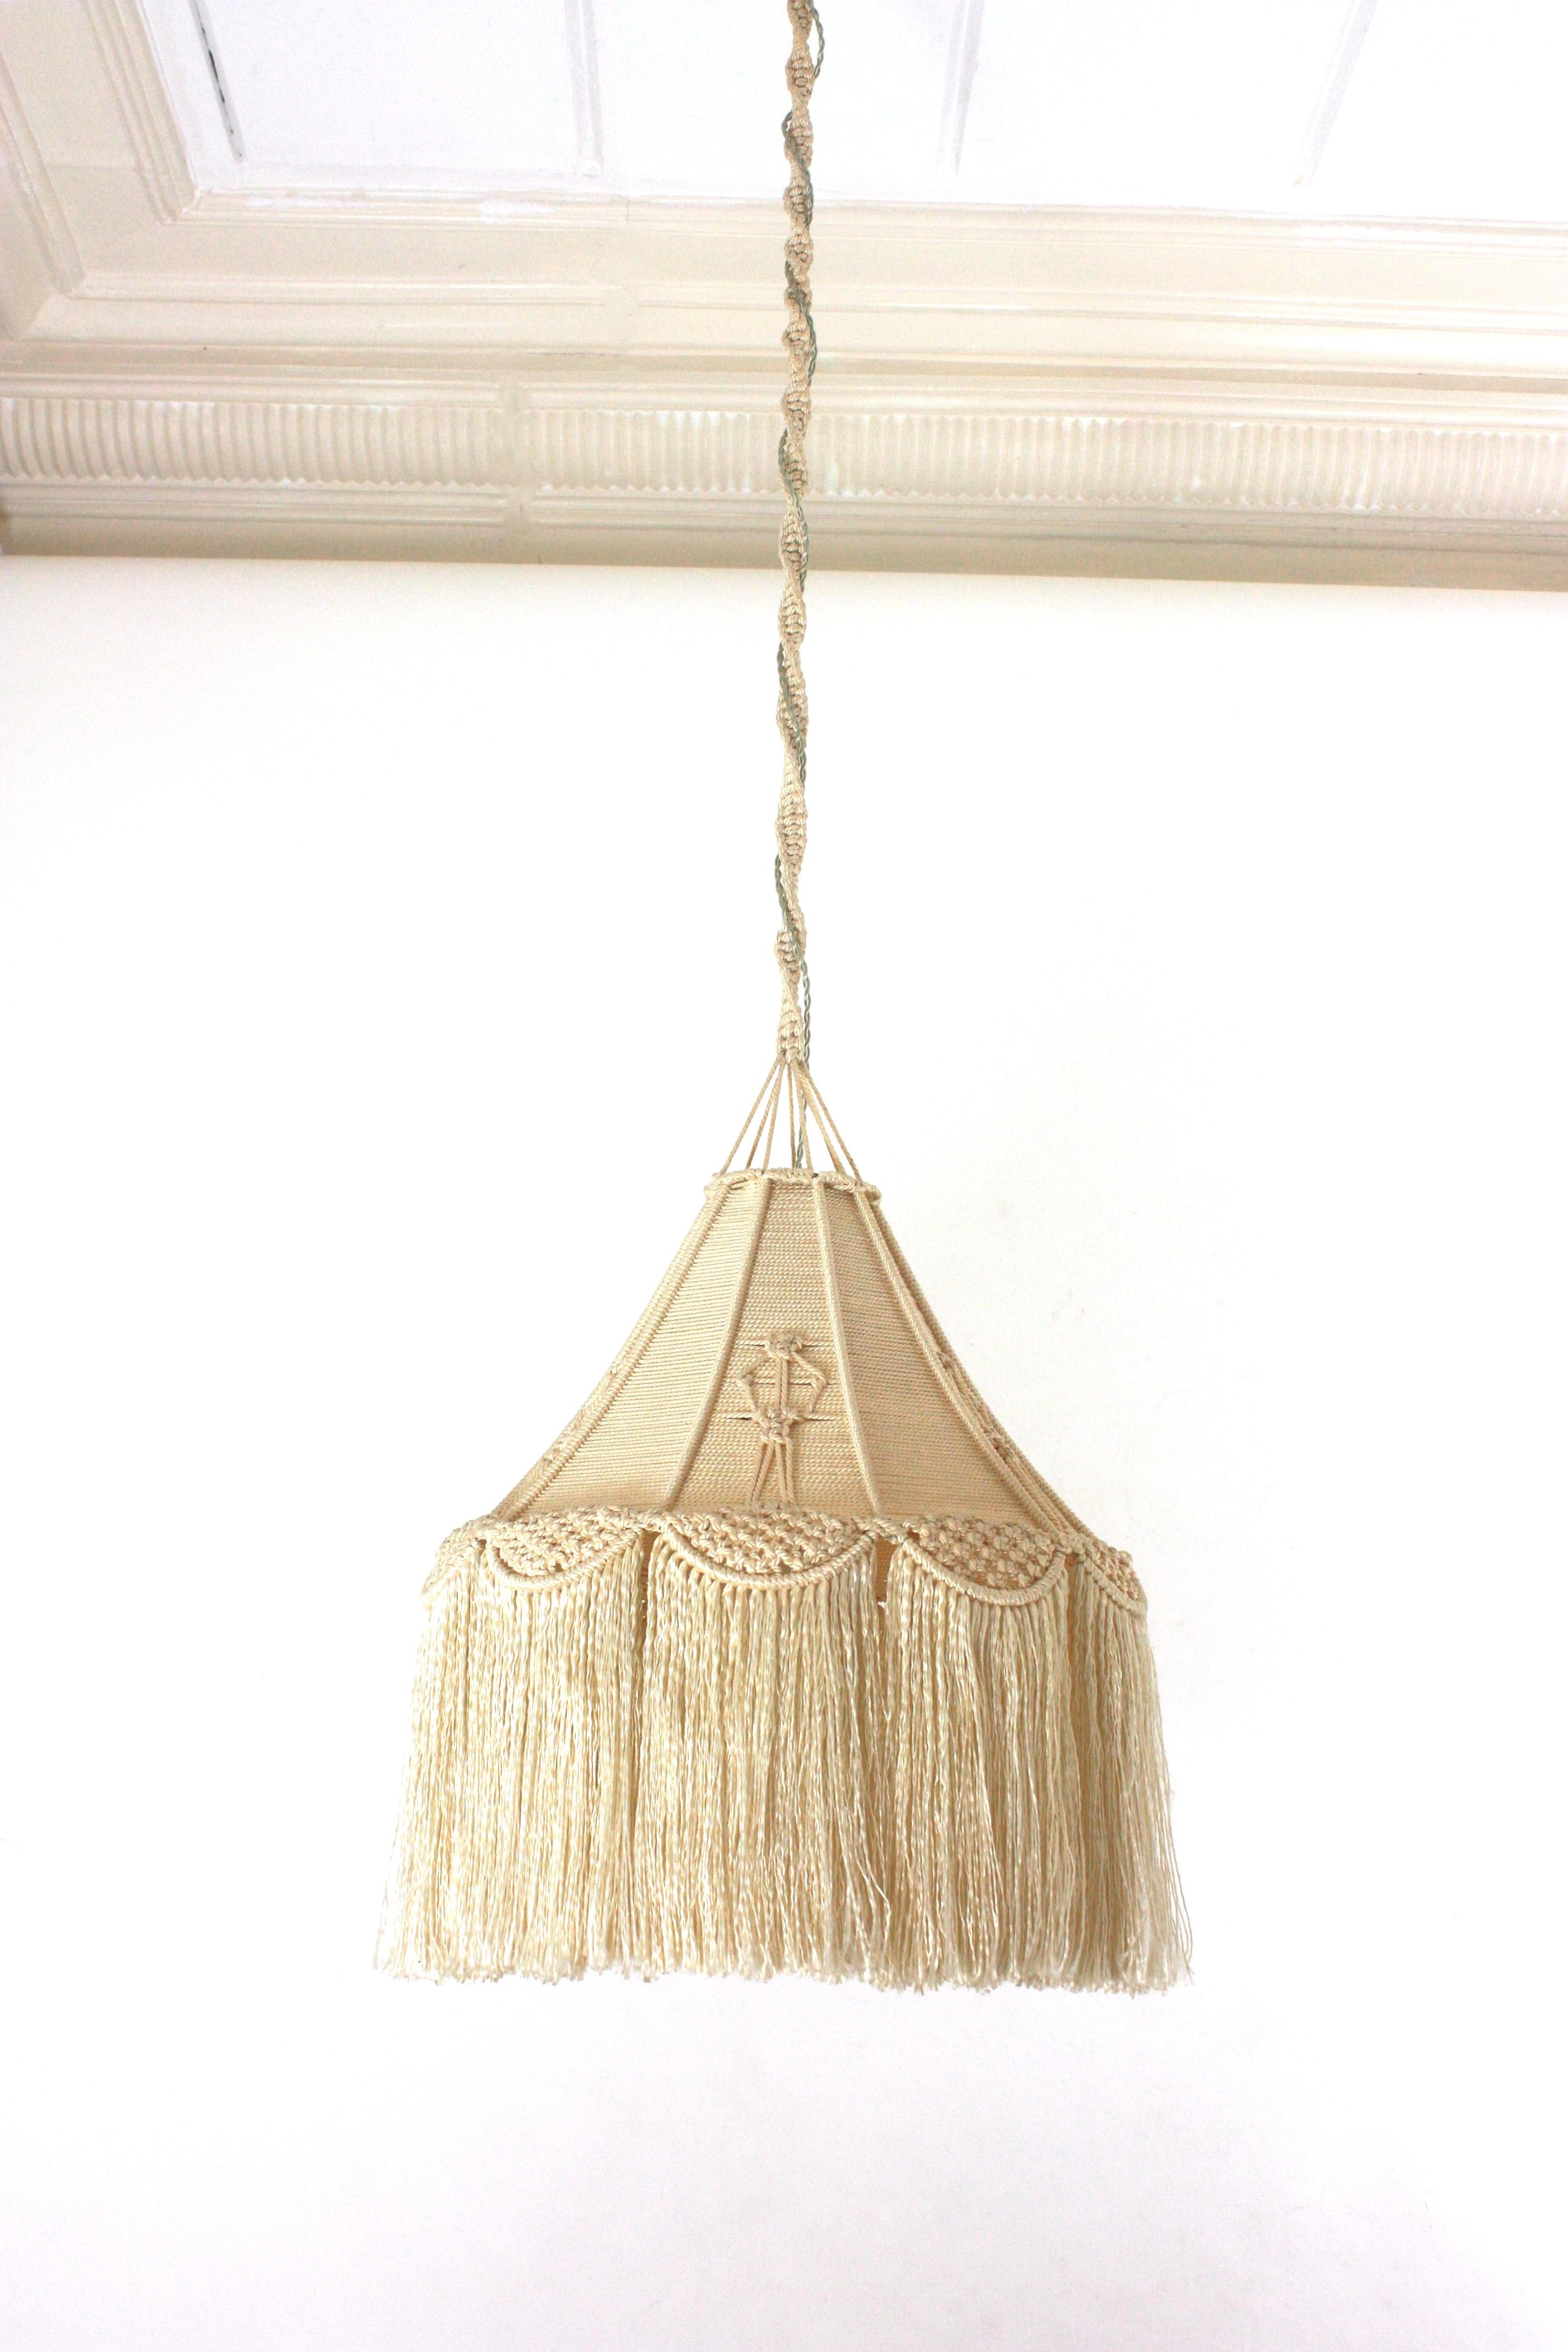 Spanish Bohemian Macrame Fiber Pendant Ceiling Hanging Lamp with Fringe For Sale